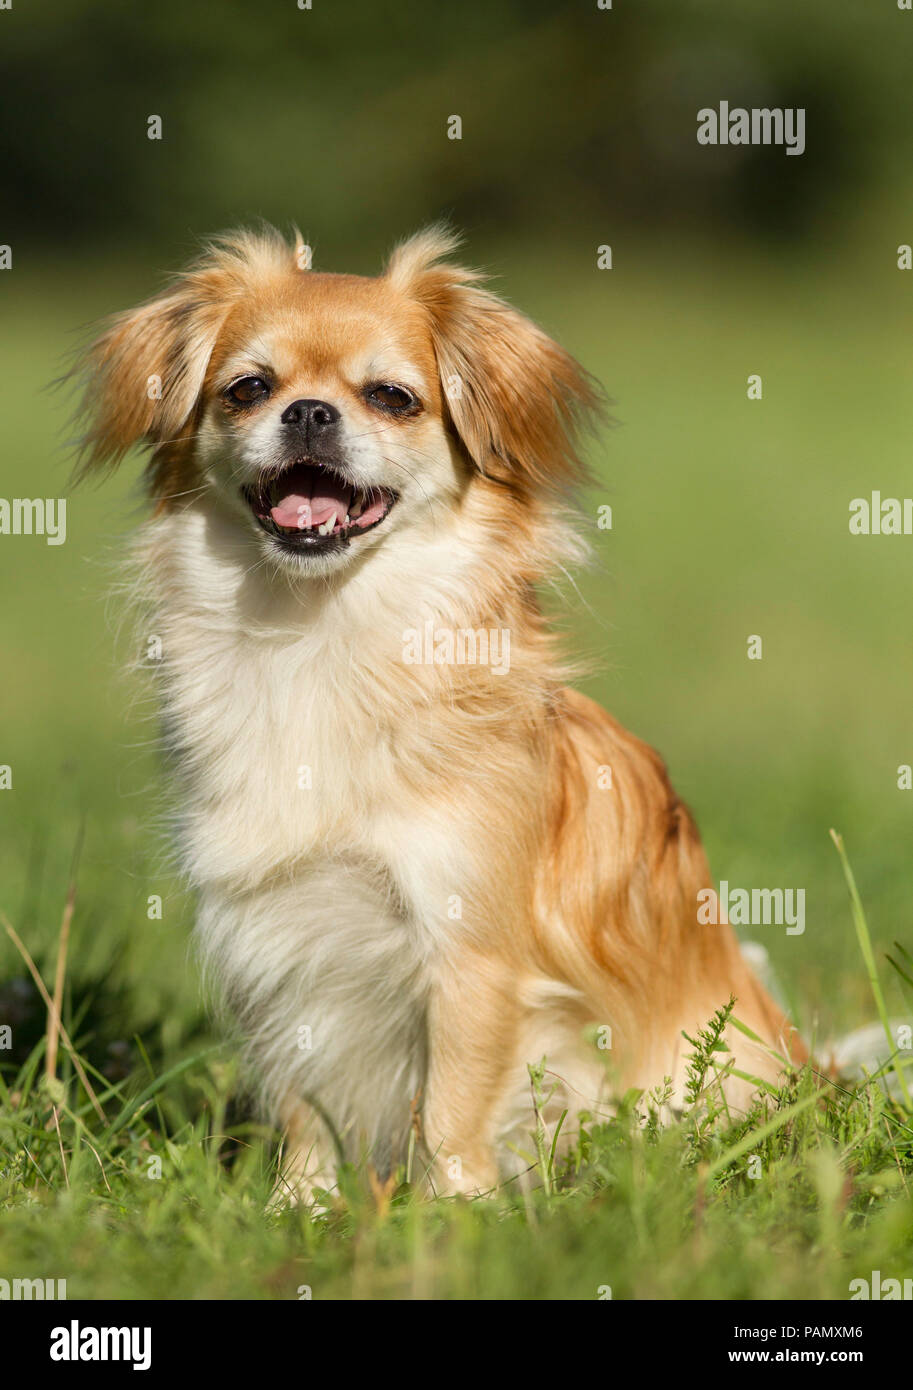 Tibetan spaniel dog sitting hi-res stock photography and images - Alamy